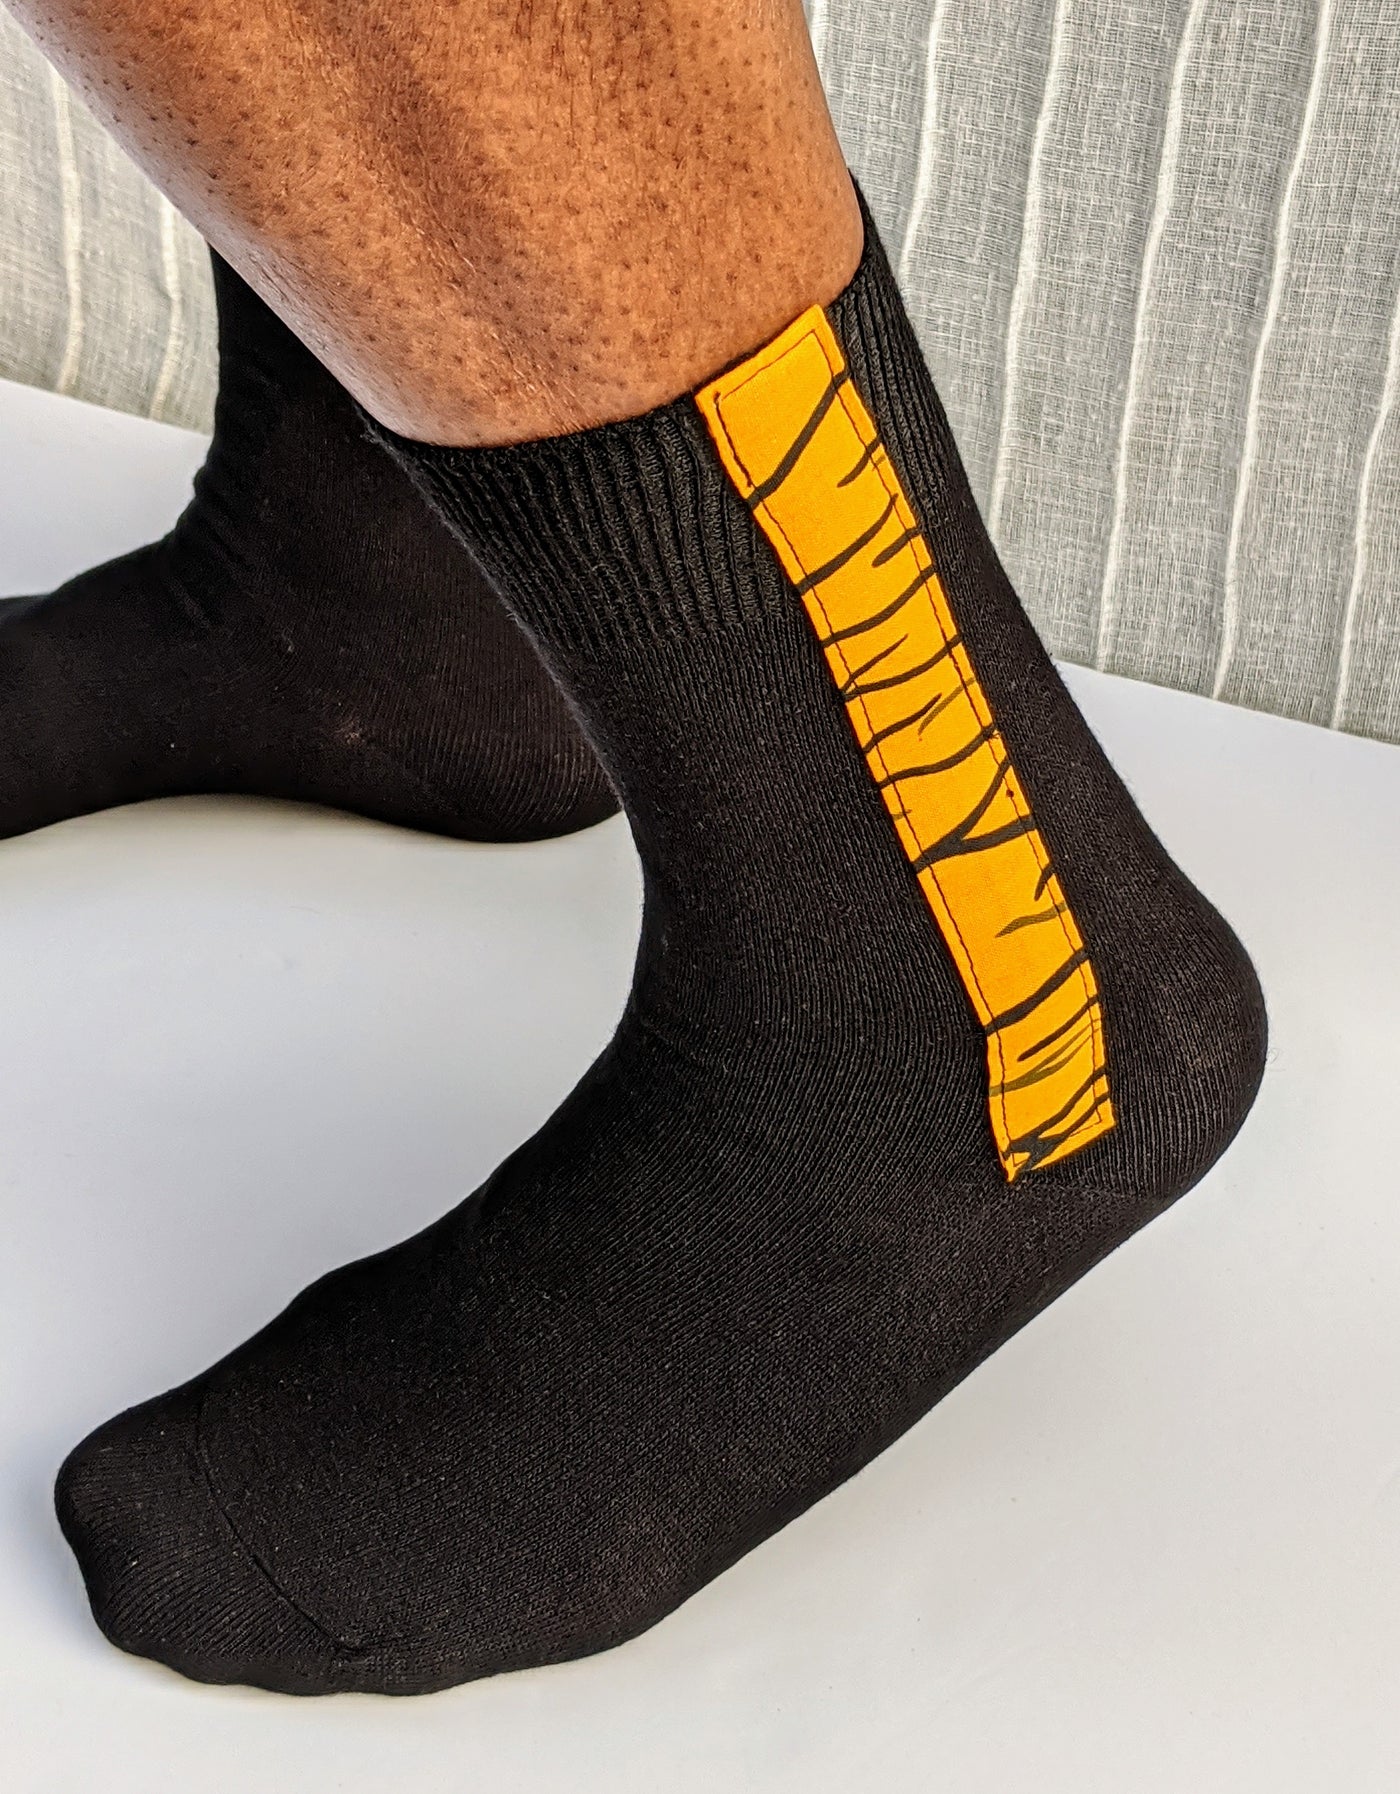 Socks with Yellow Kente print